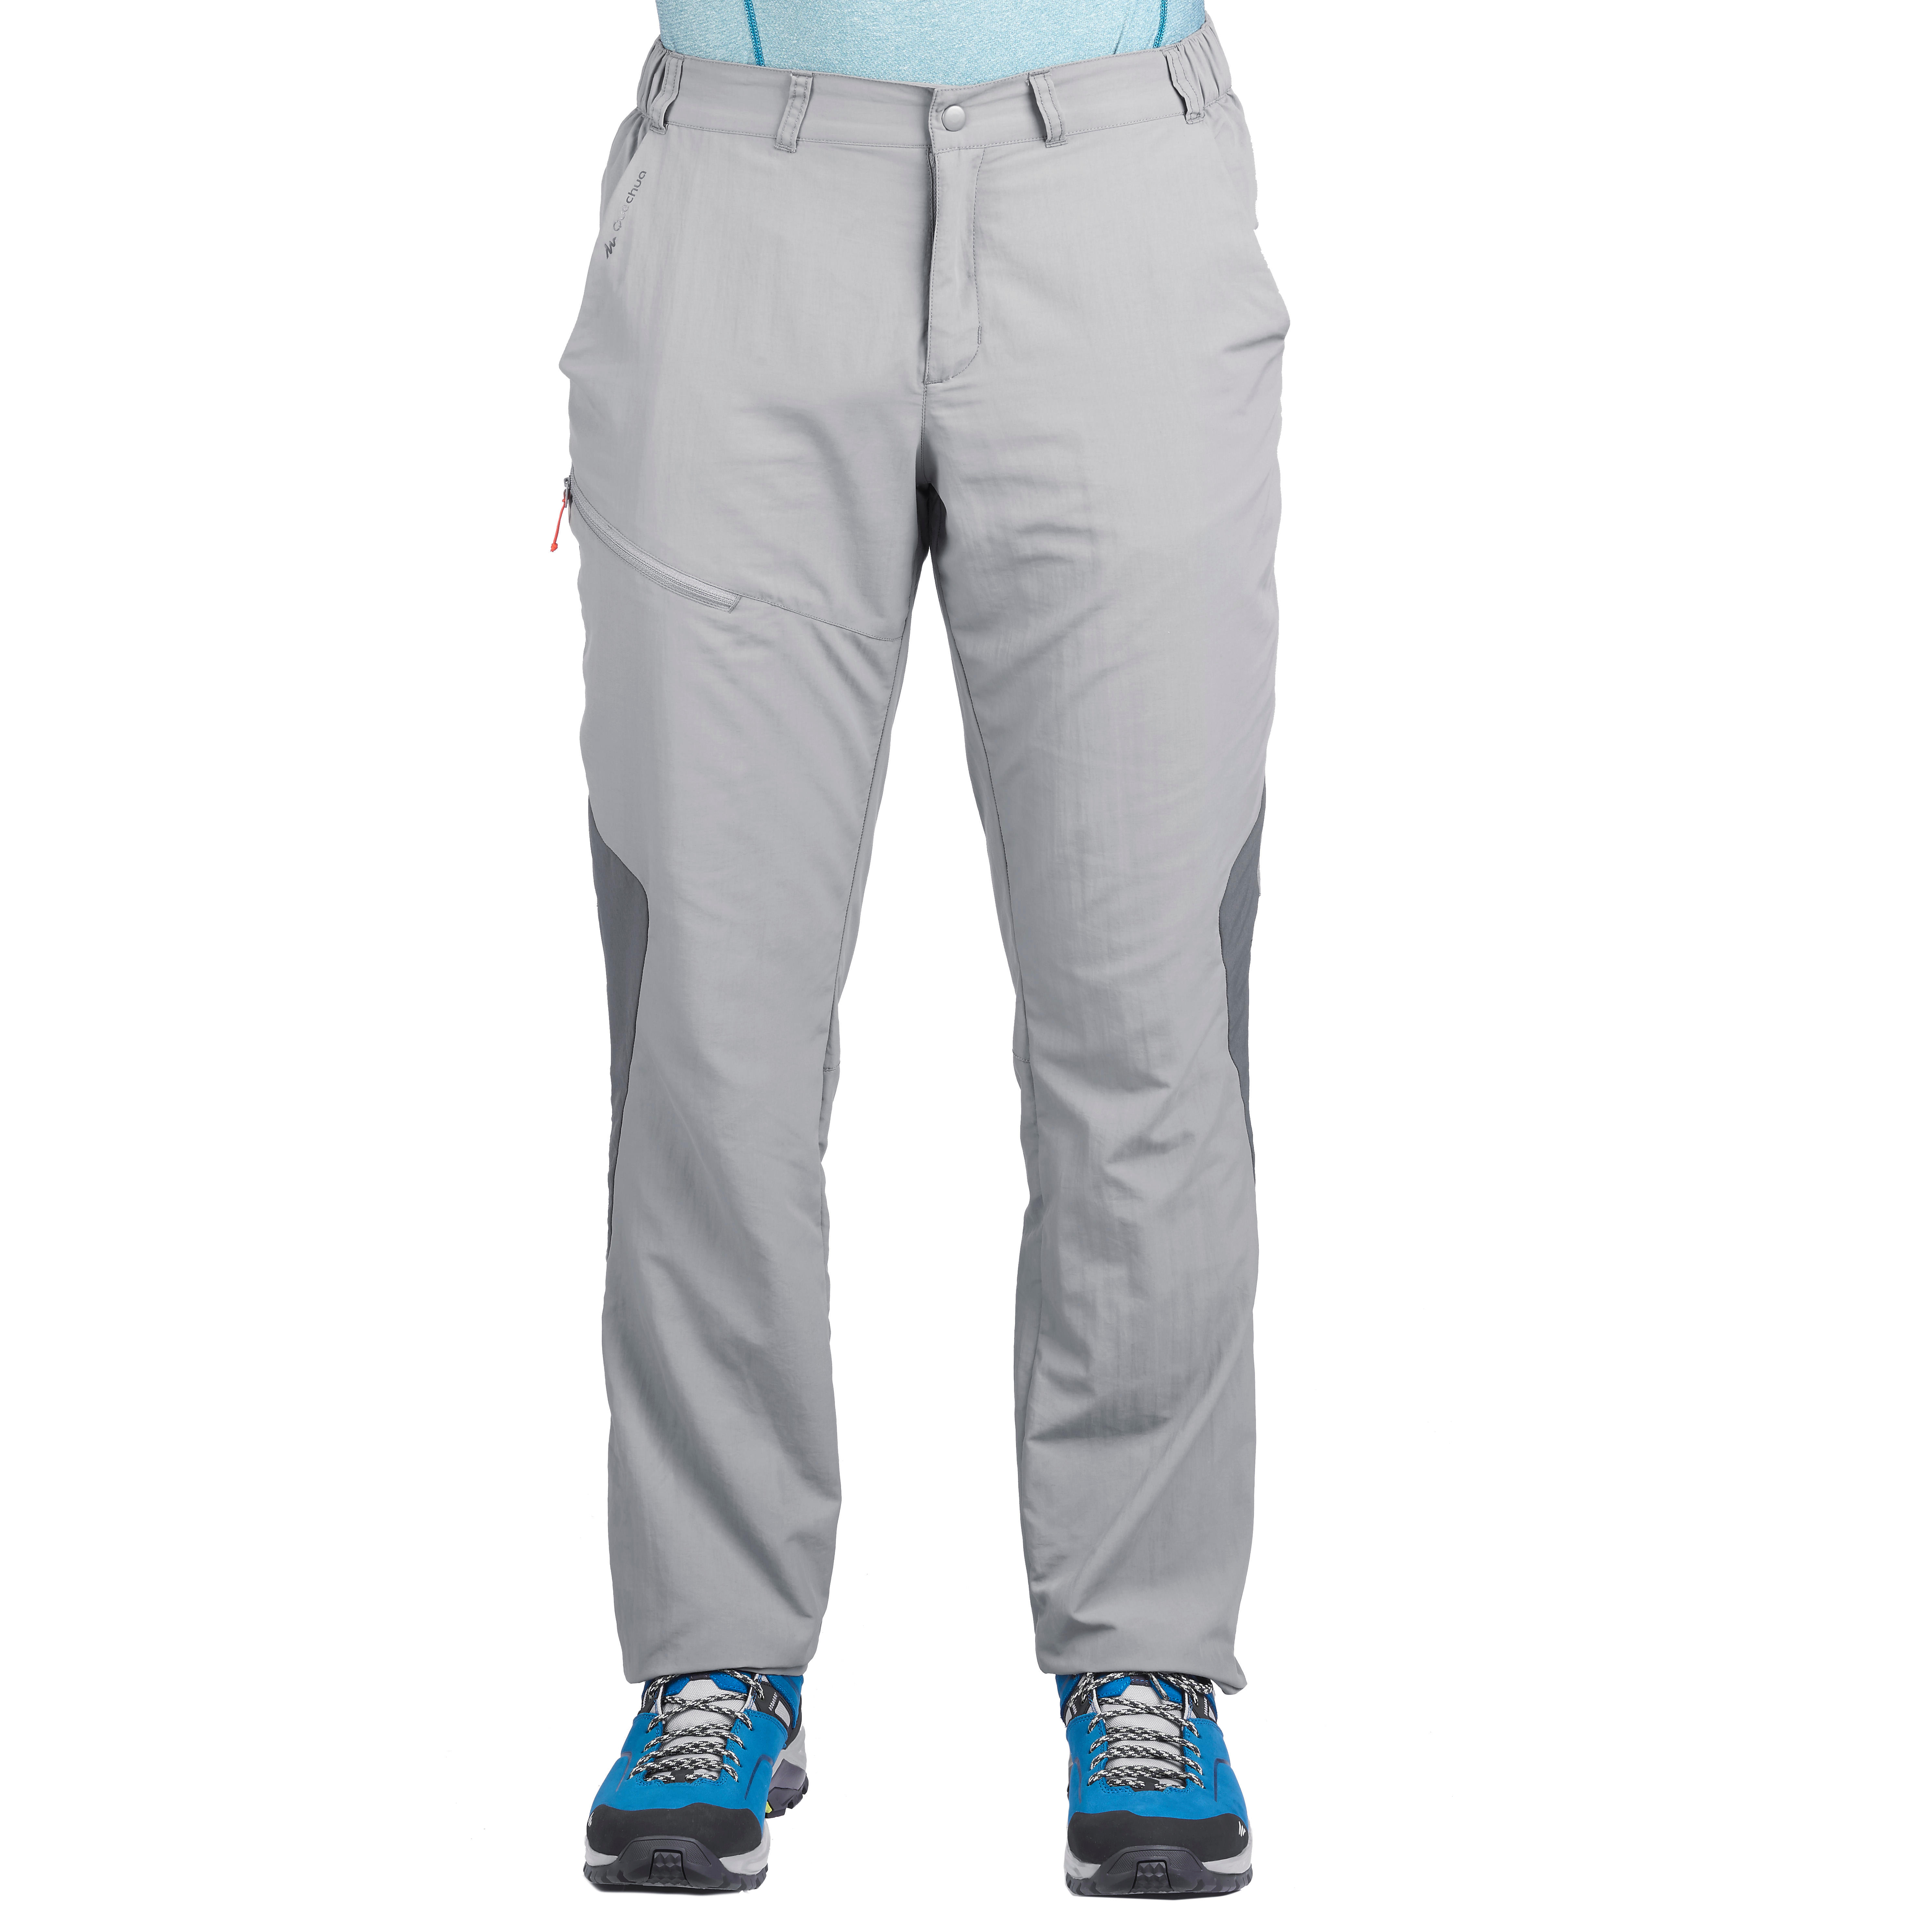 Decathlon Men's Cargo Pant | Men's Breathable Trousers Pants SG-500 Khaki |  Should i Buy - YouTube